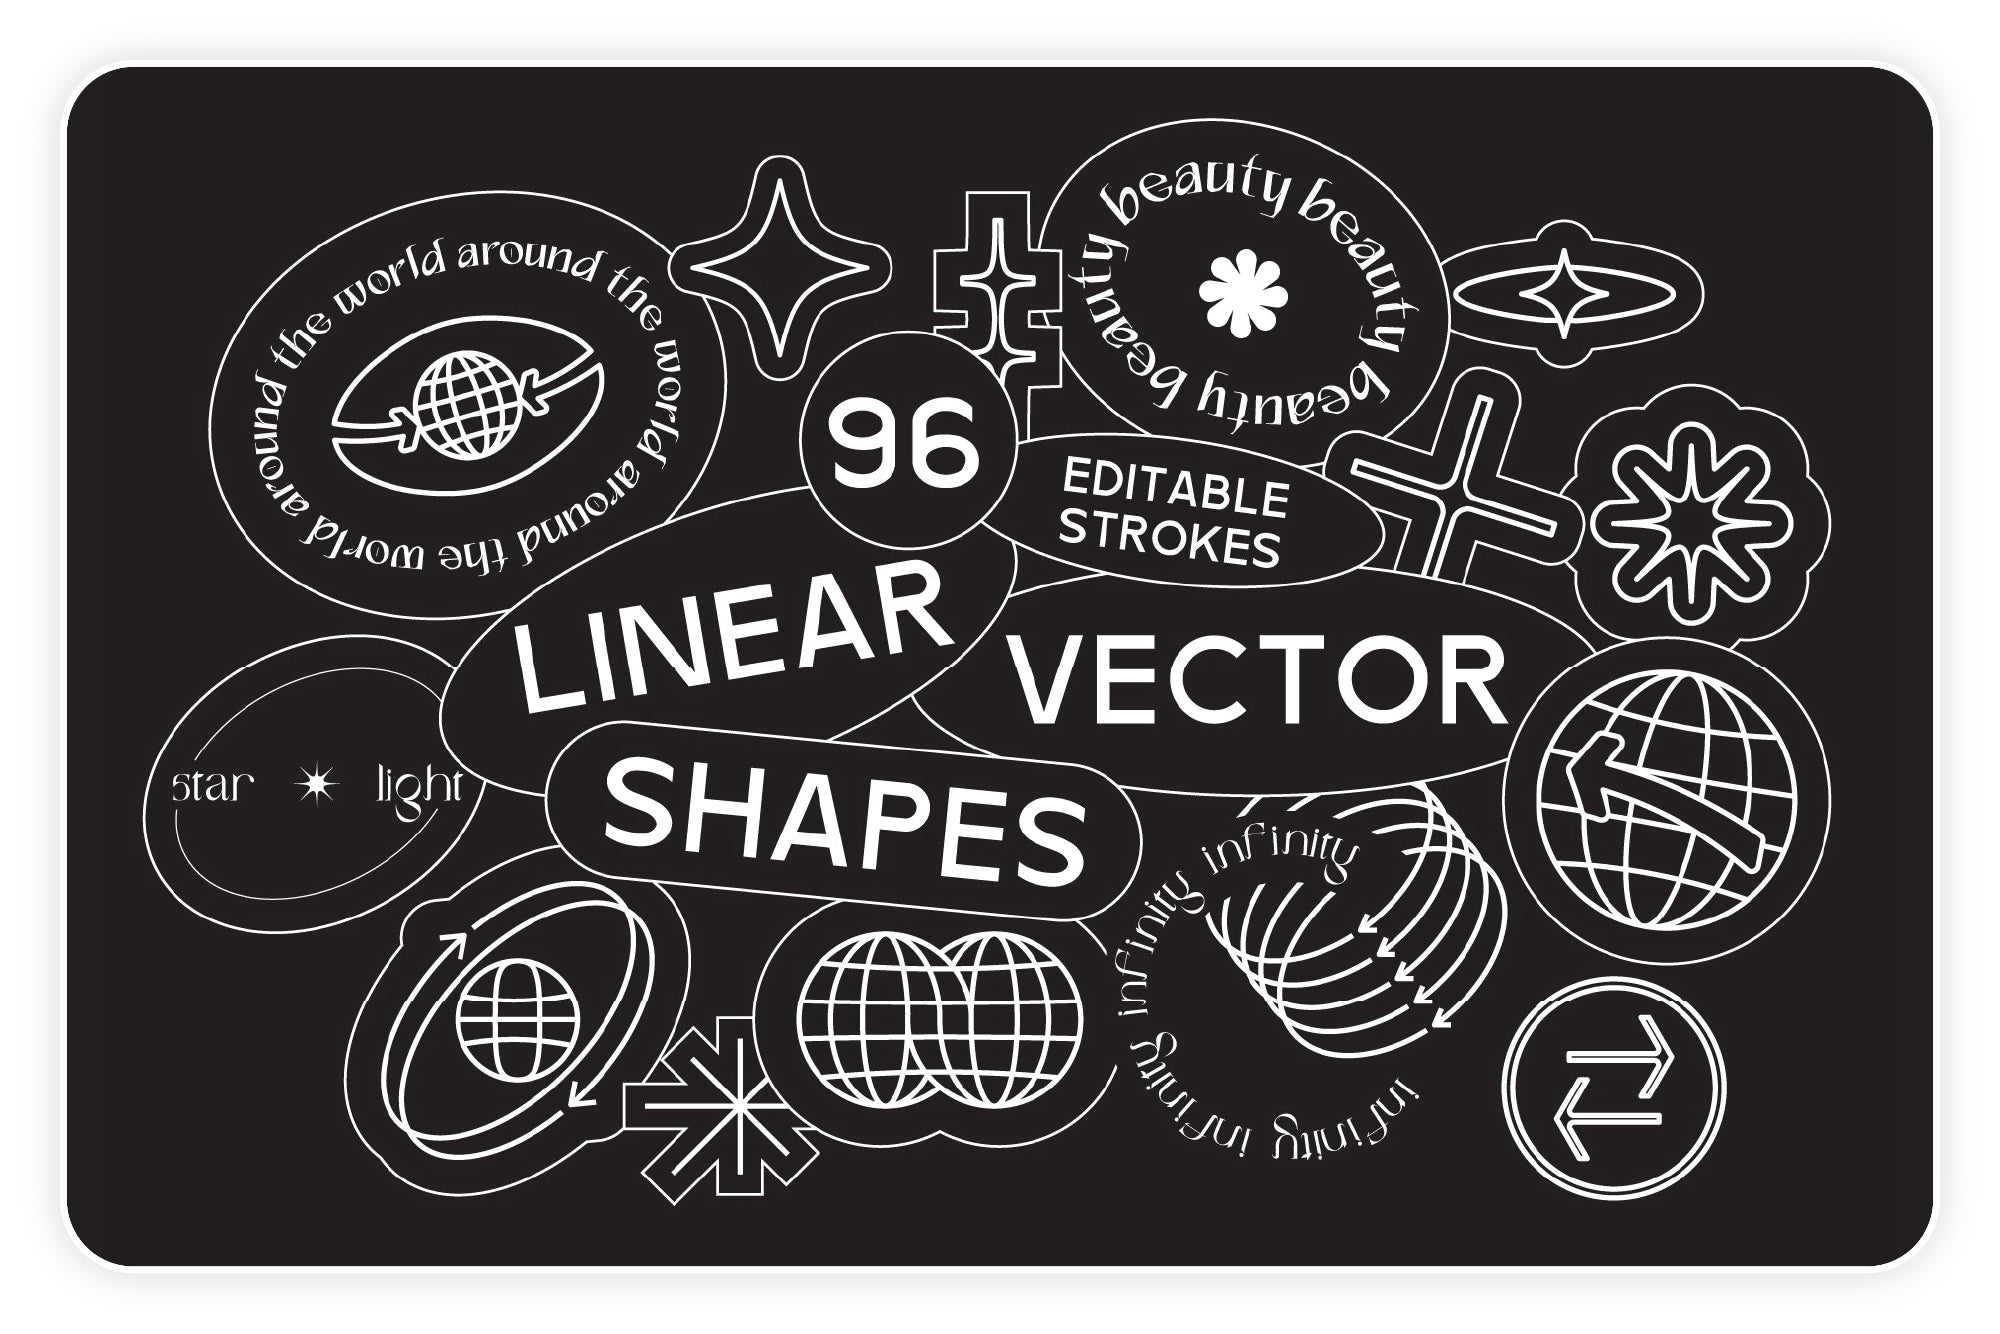 Vetor de Vector set of linear fun patches,stickers,geometric